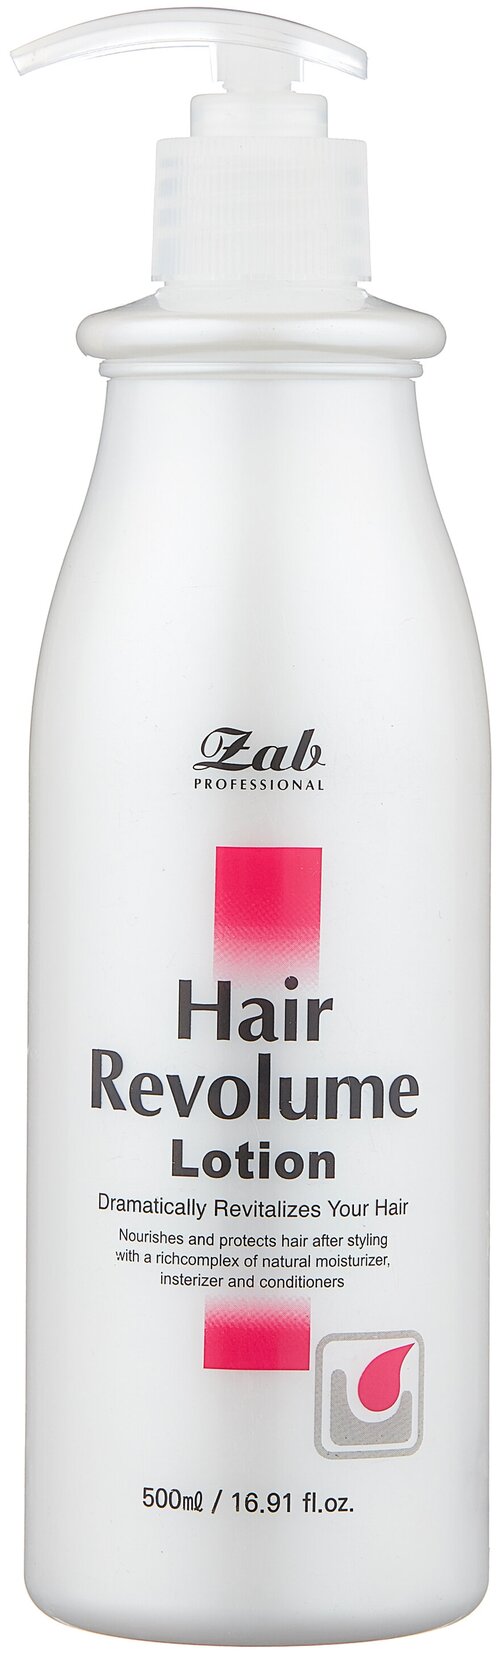 Zab Лосьон Hair Revolume Lotion, 500 мл